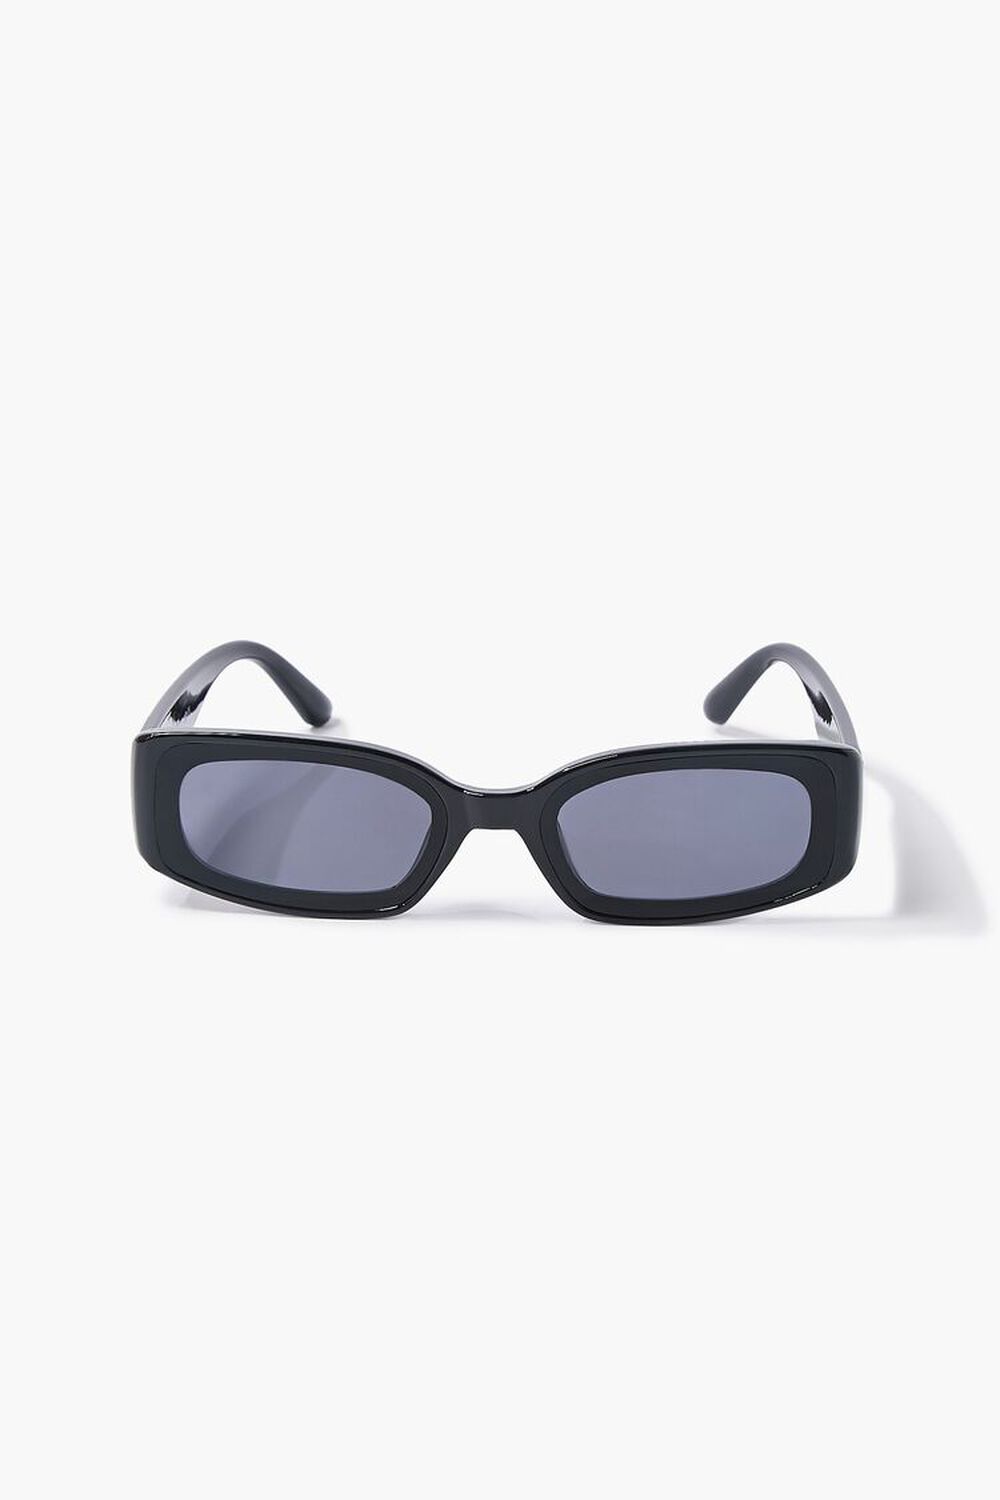 BLACK/BLACK Rectangle Tinted Sunglasses, image 1